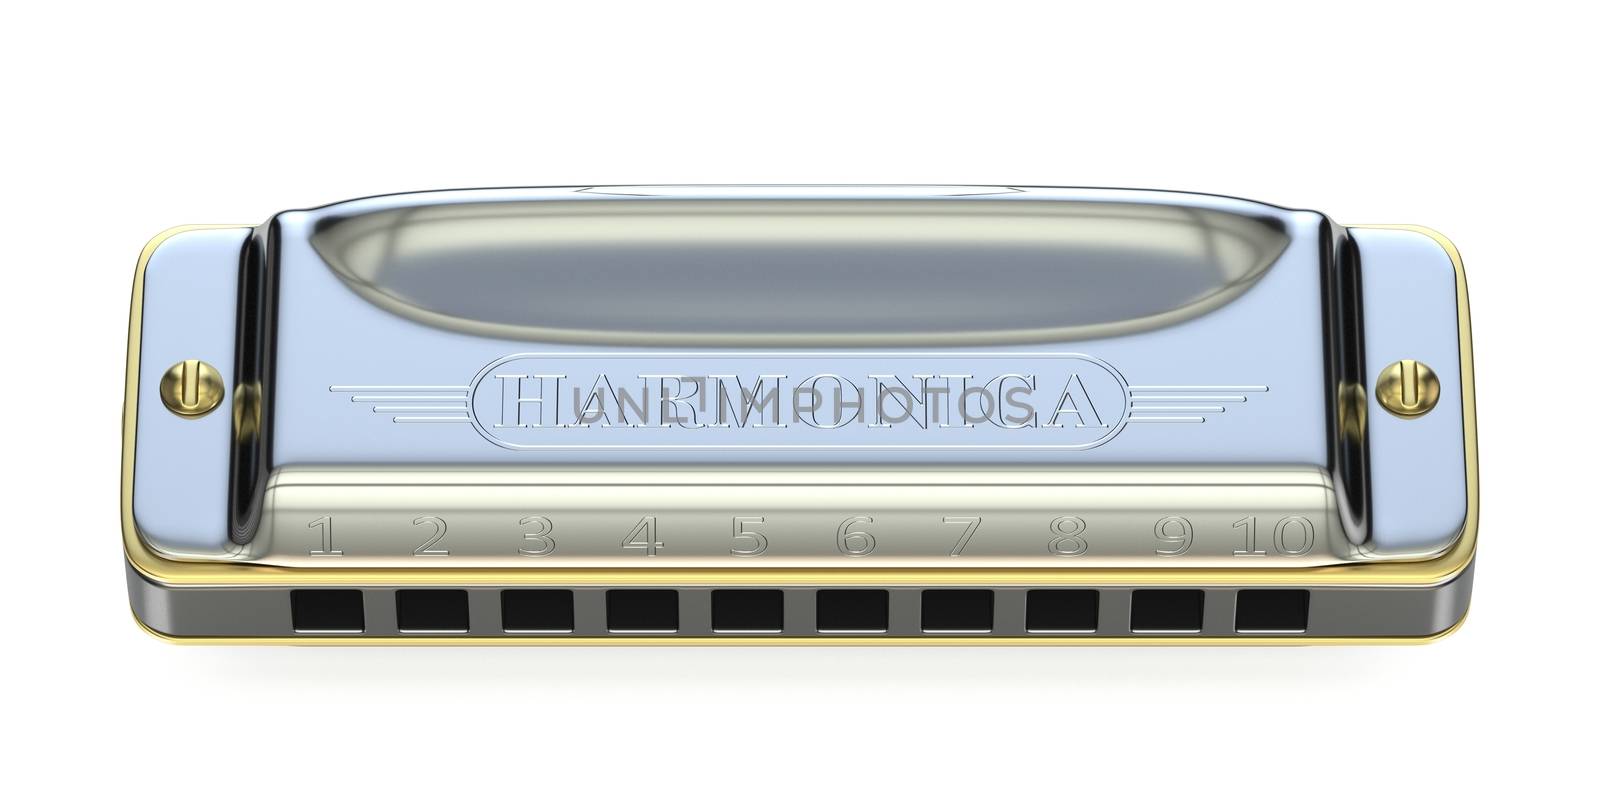 Diatonic harmonica 3D render illustration isolated on white background